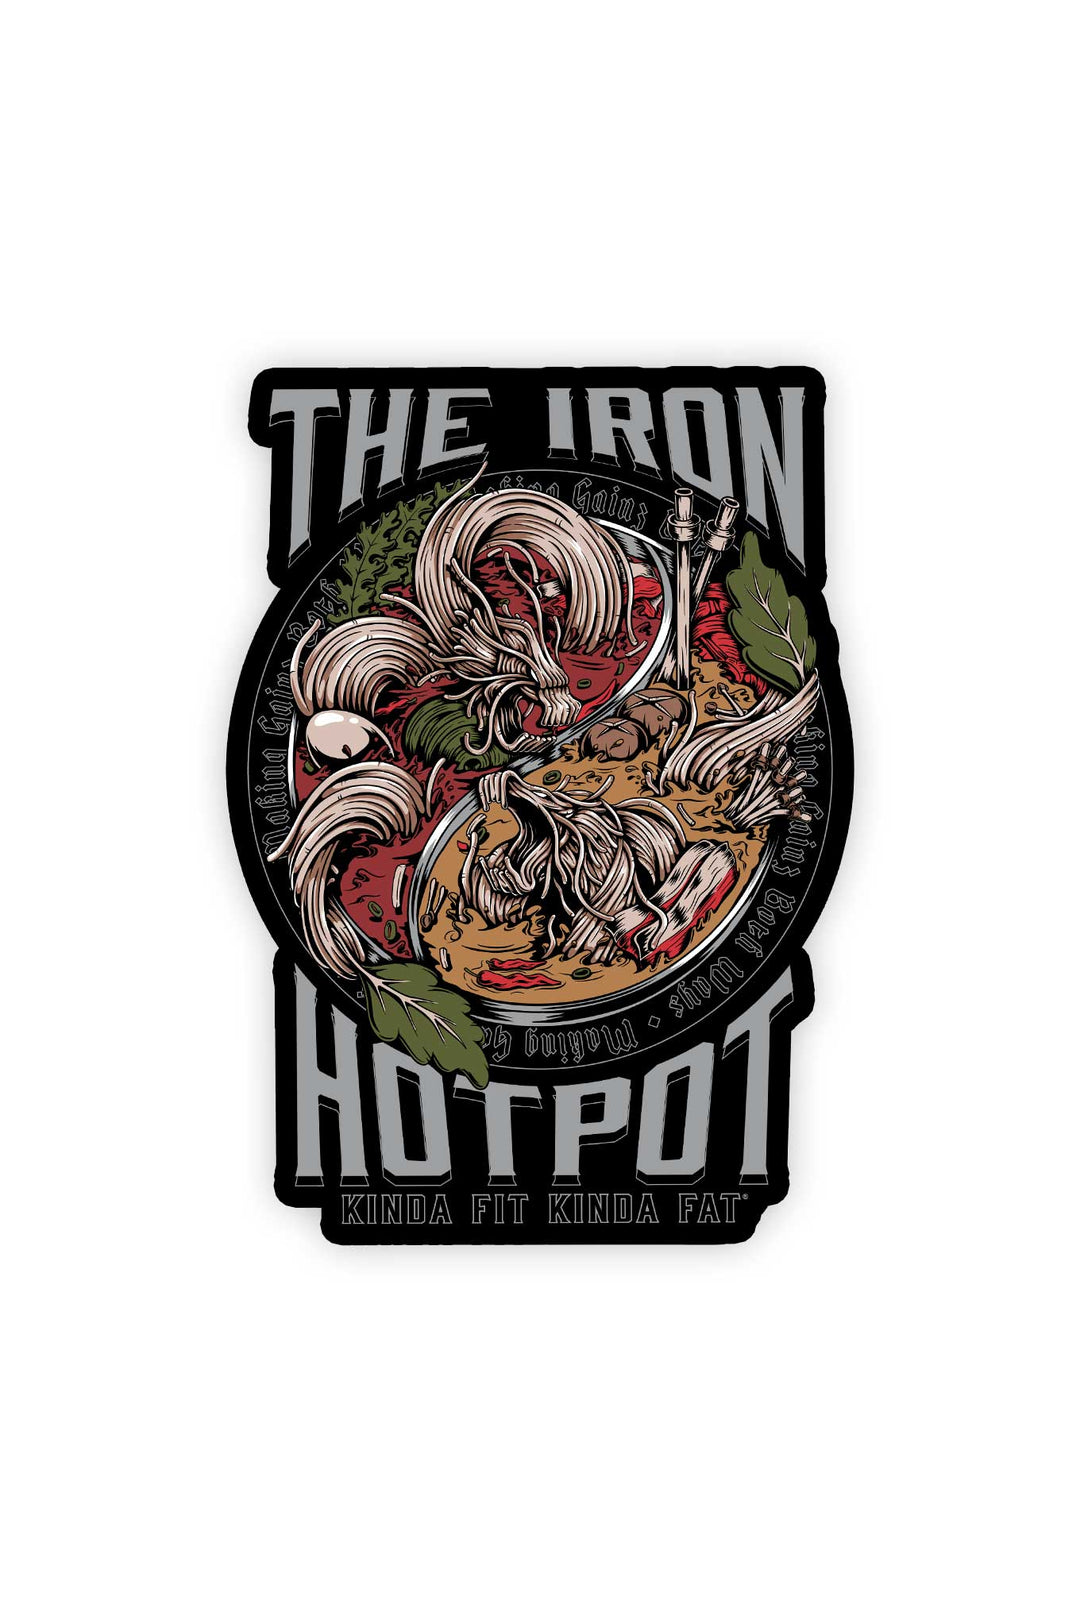 The Iron Hot Pot Sticker